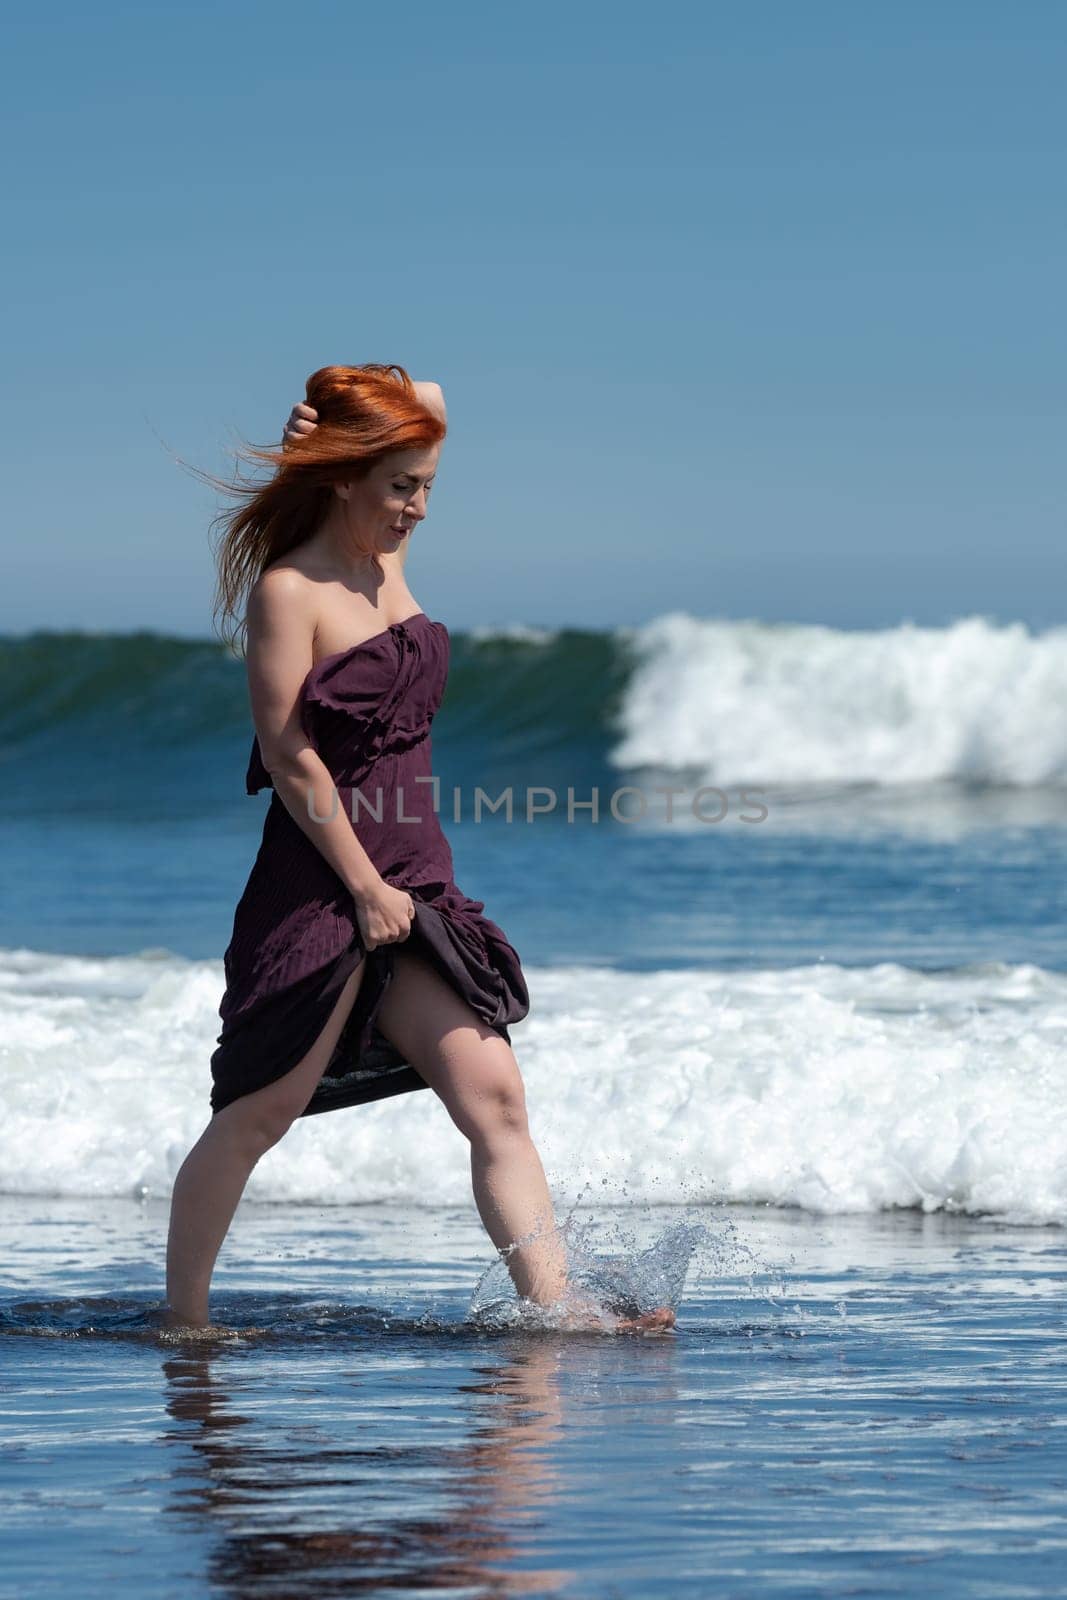 Redheaded woman is enjoying summer holidays by walking ankle deep in refreshing ocean waves on beach by Alexander-Piragis